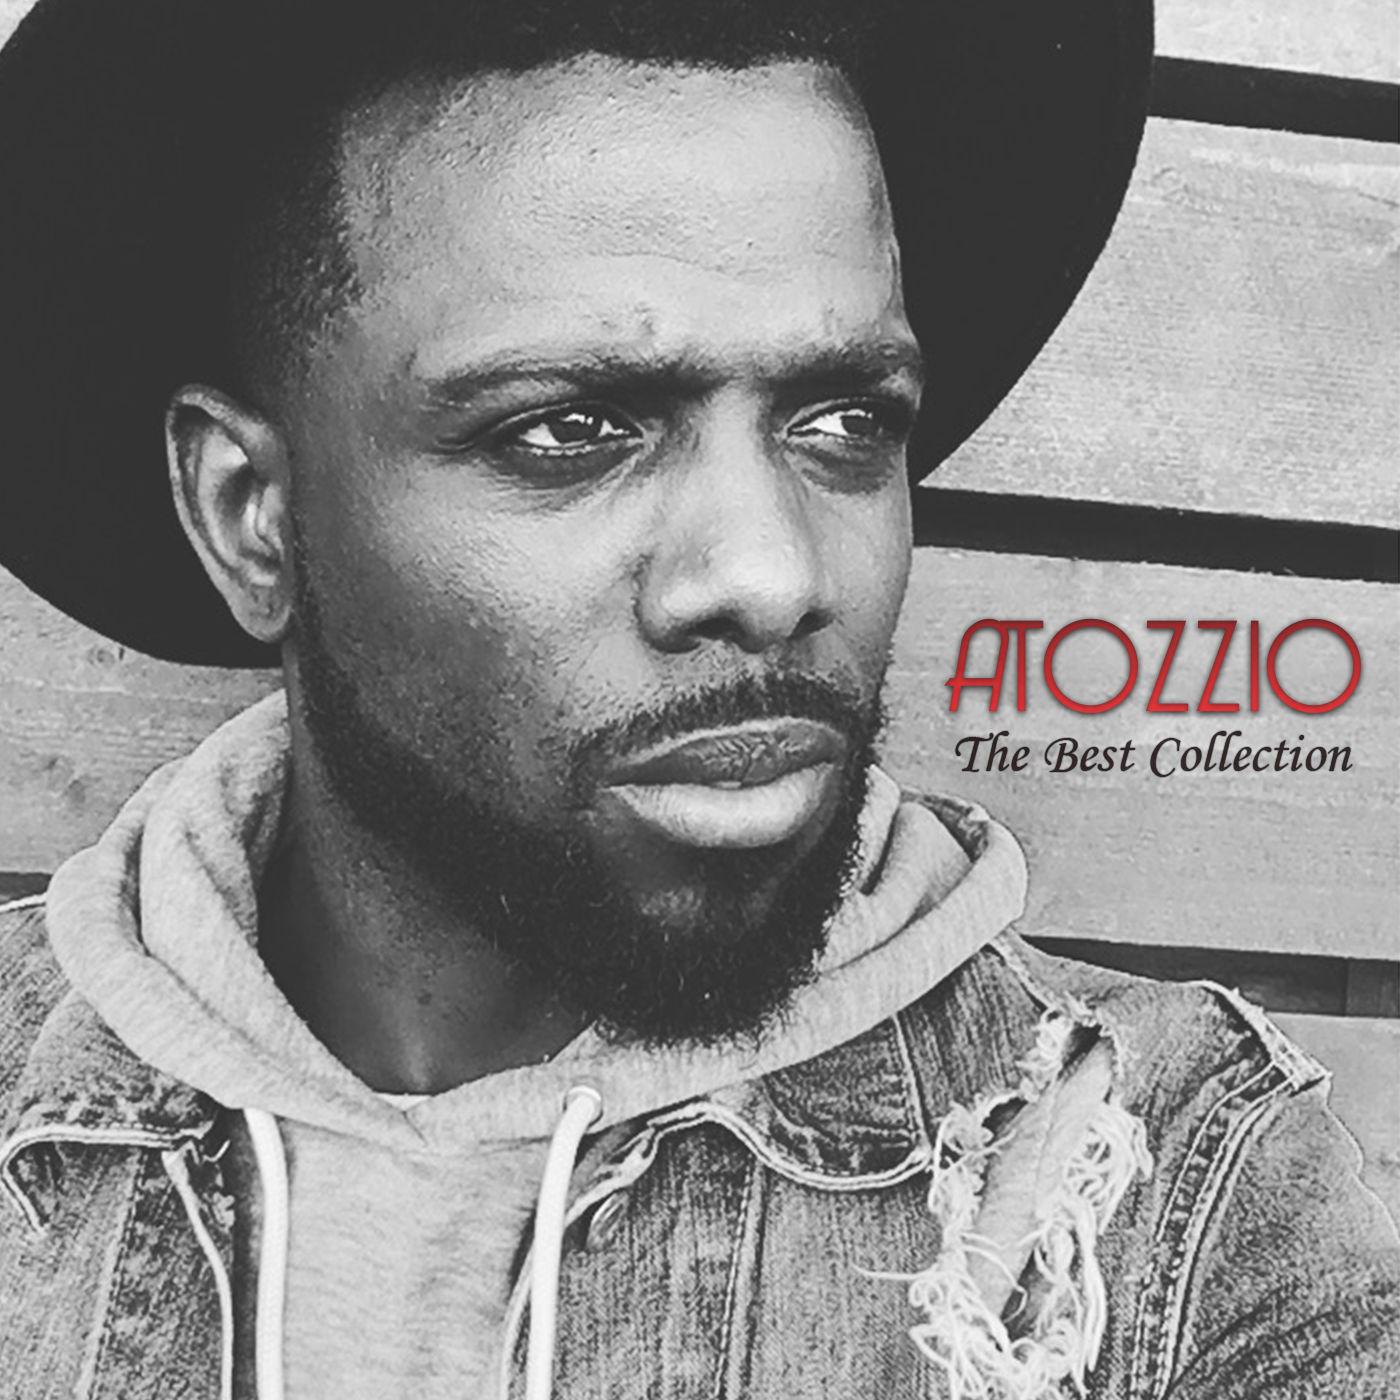 Atozzio - Worthless